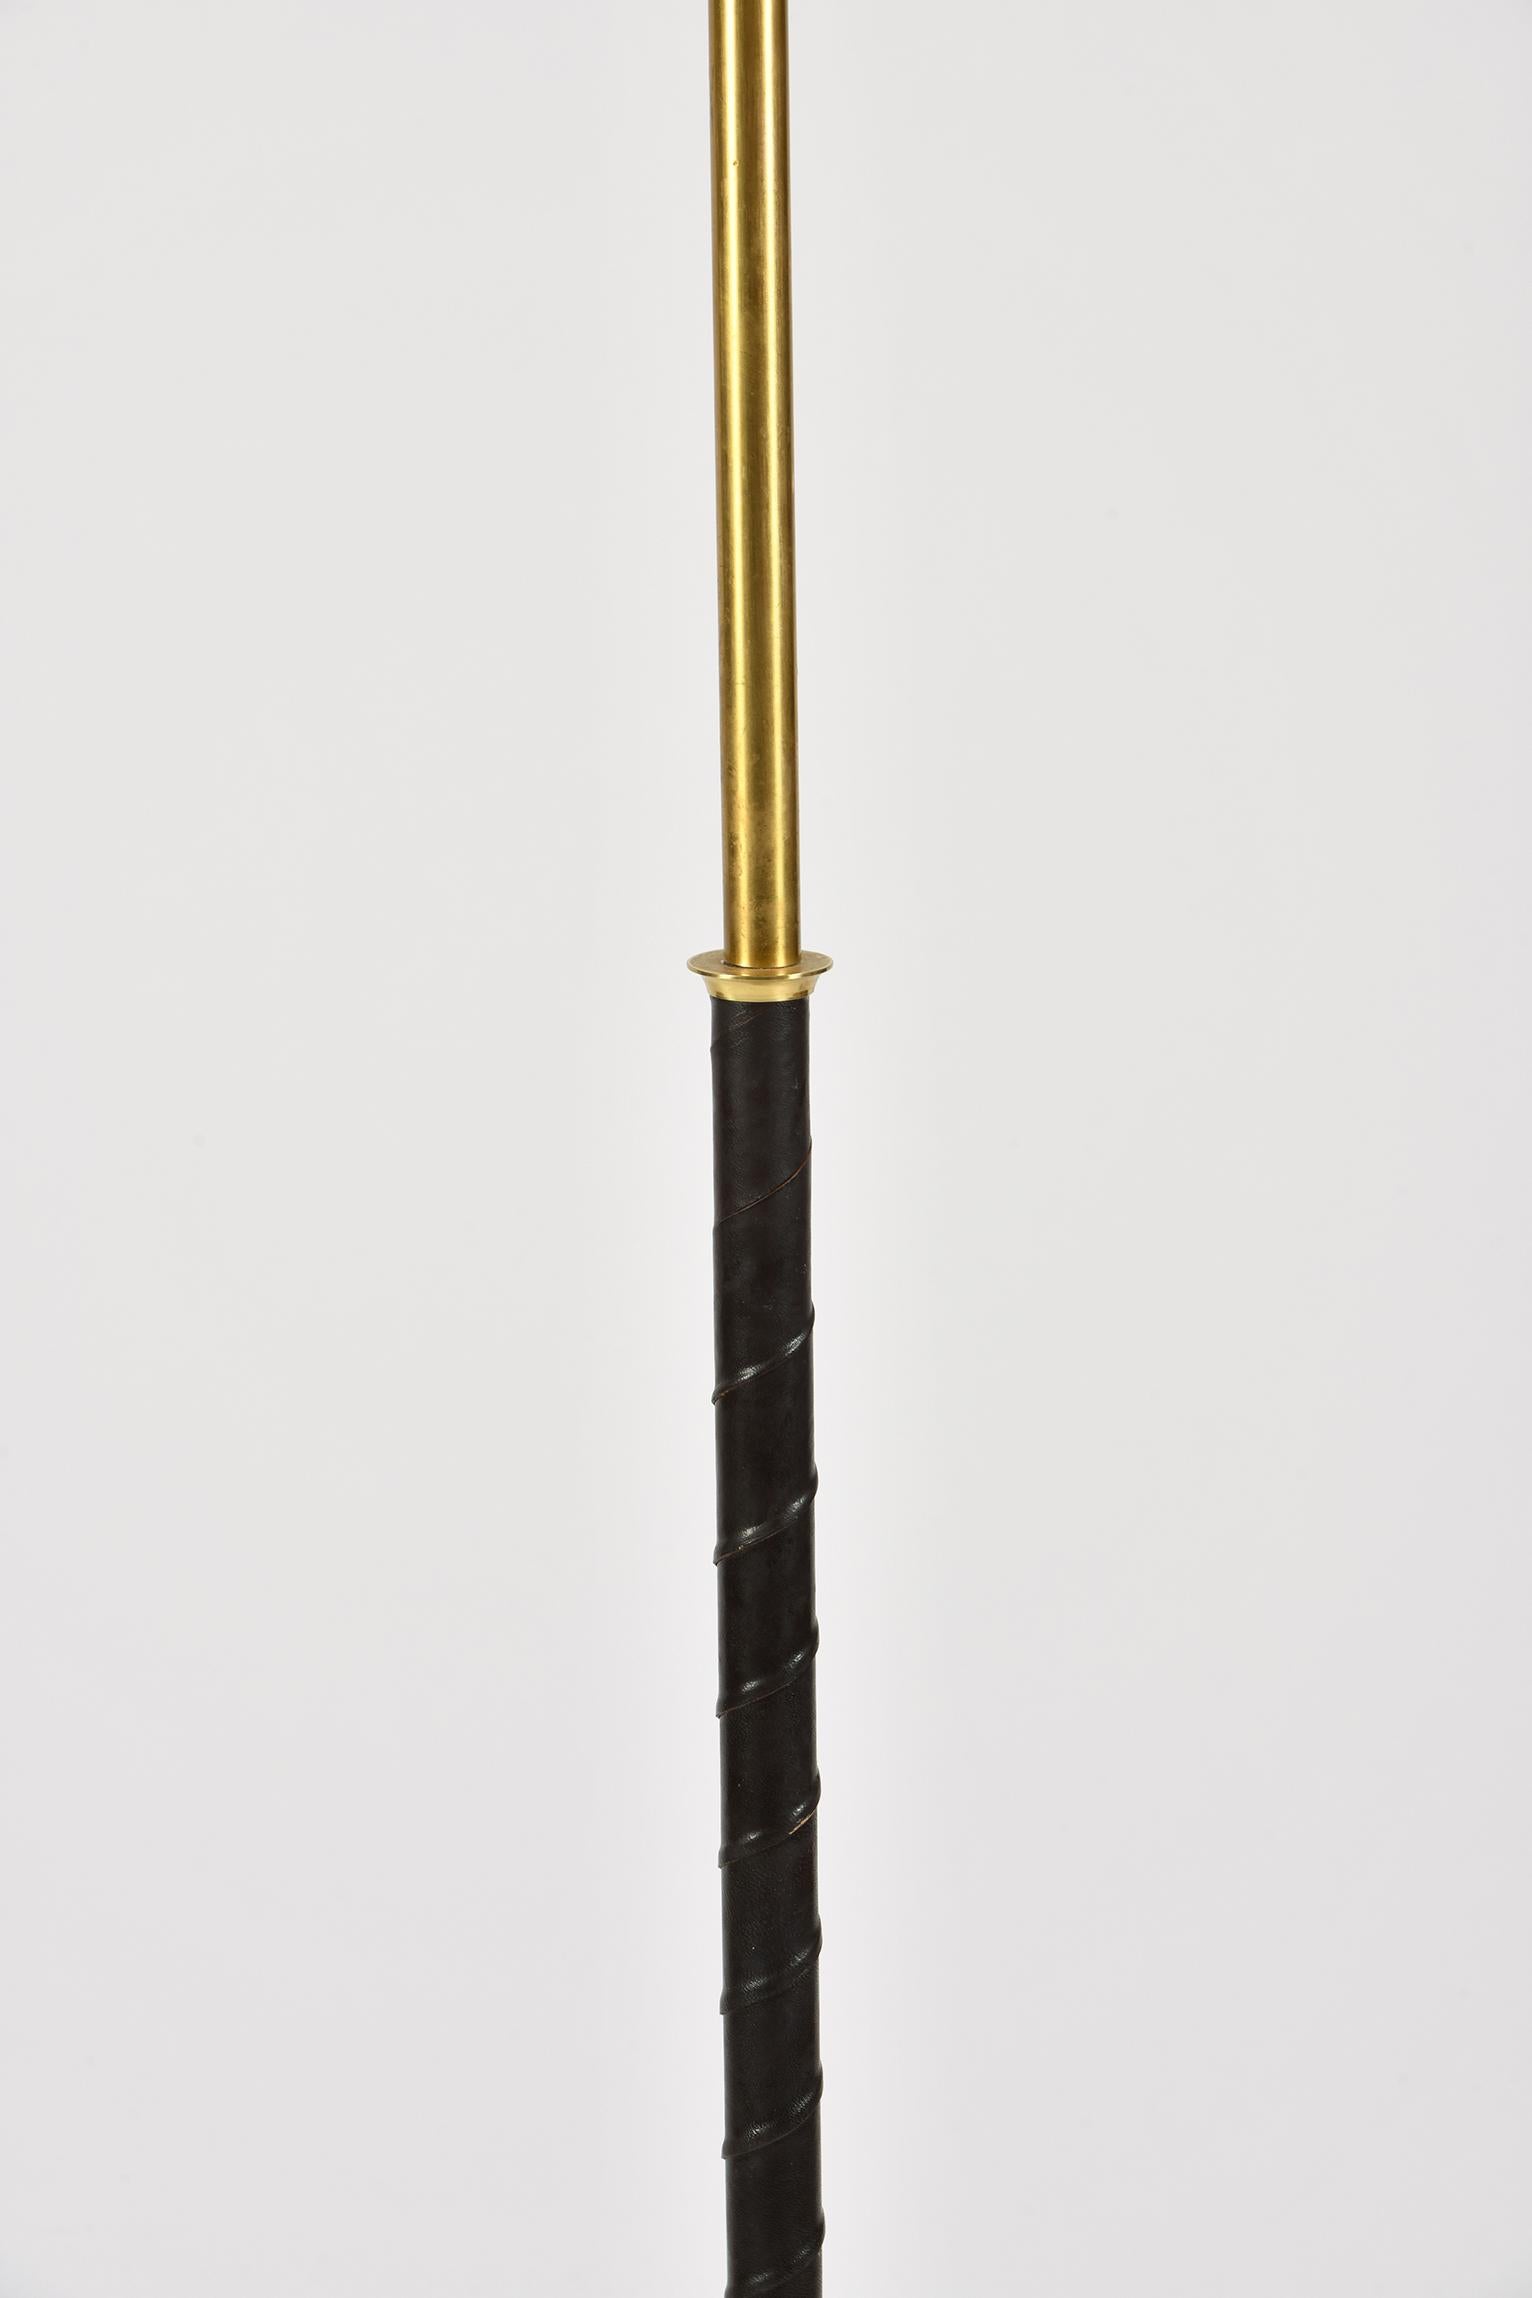 Swedish Midcentury Brass and Black Leather Floor Lamp